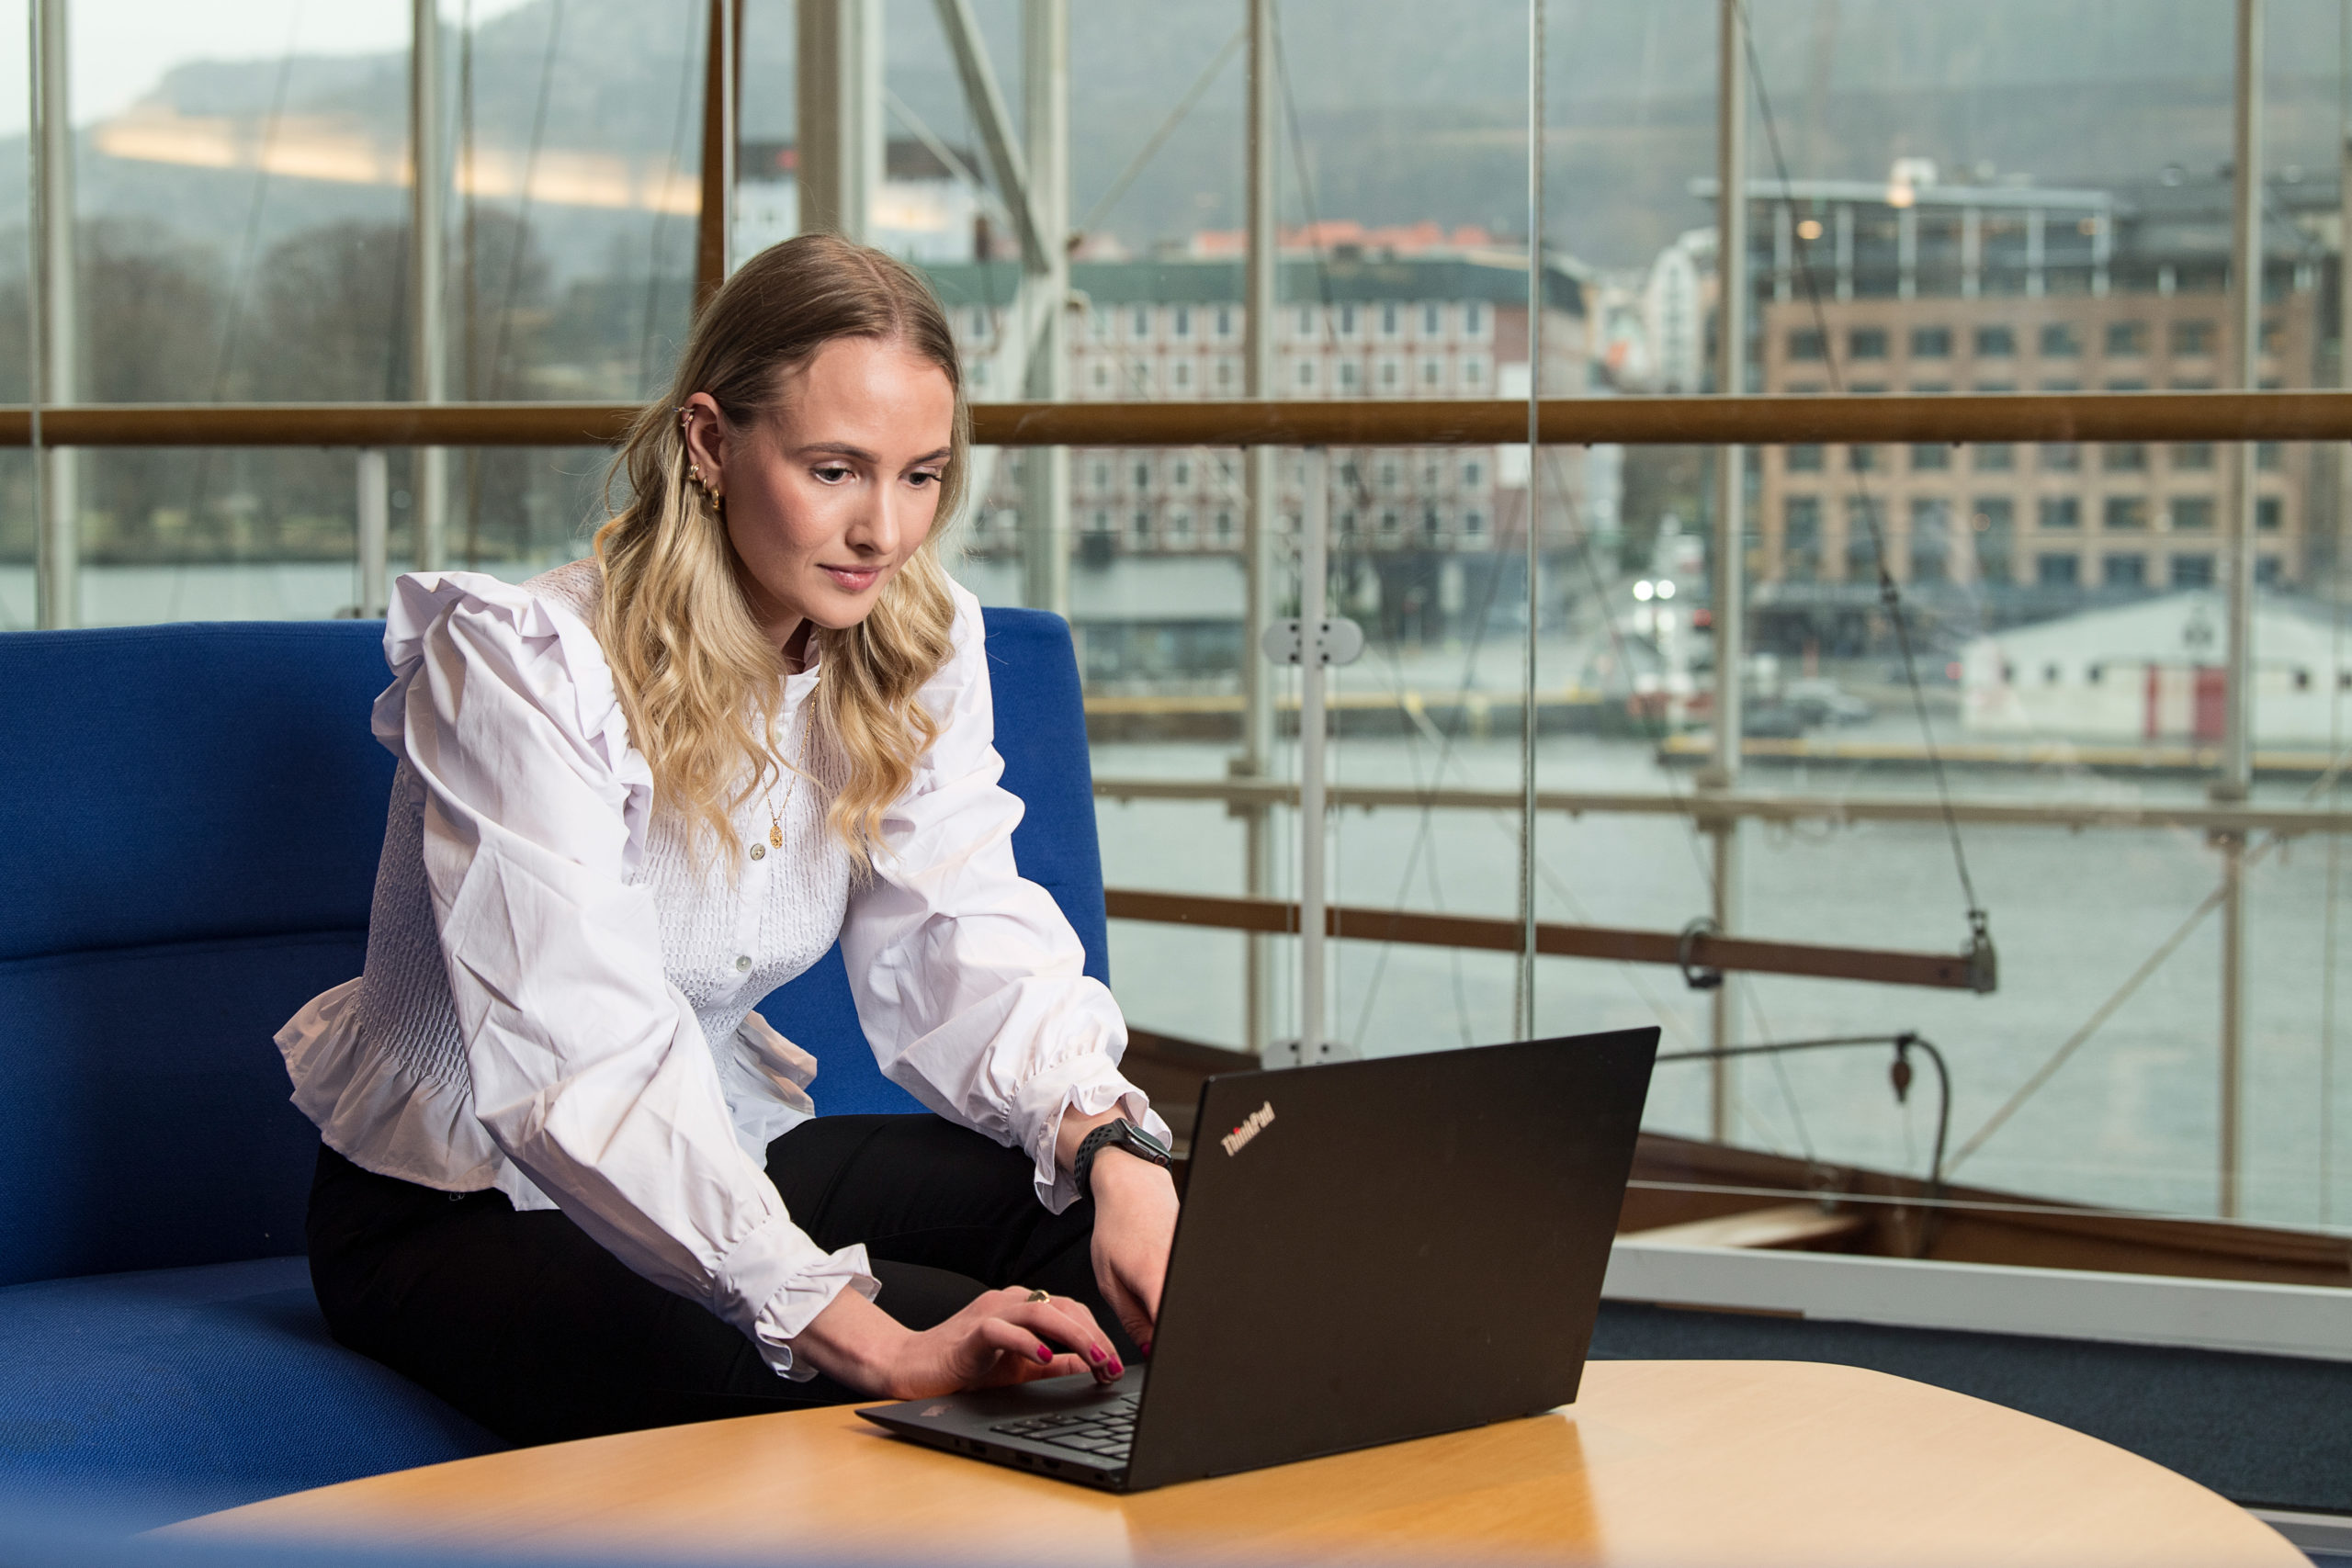 Marit Eiken Fosse works on her computer at the headquarter of Grieg Group in Bergen.